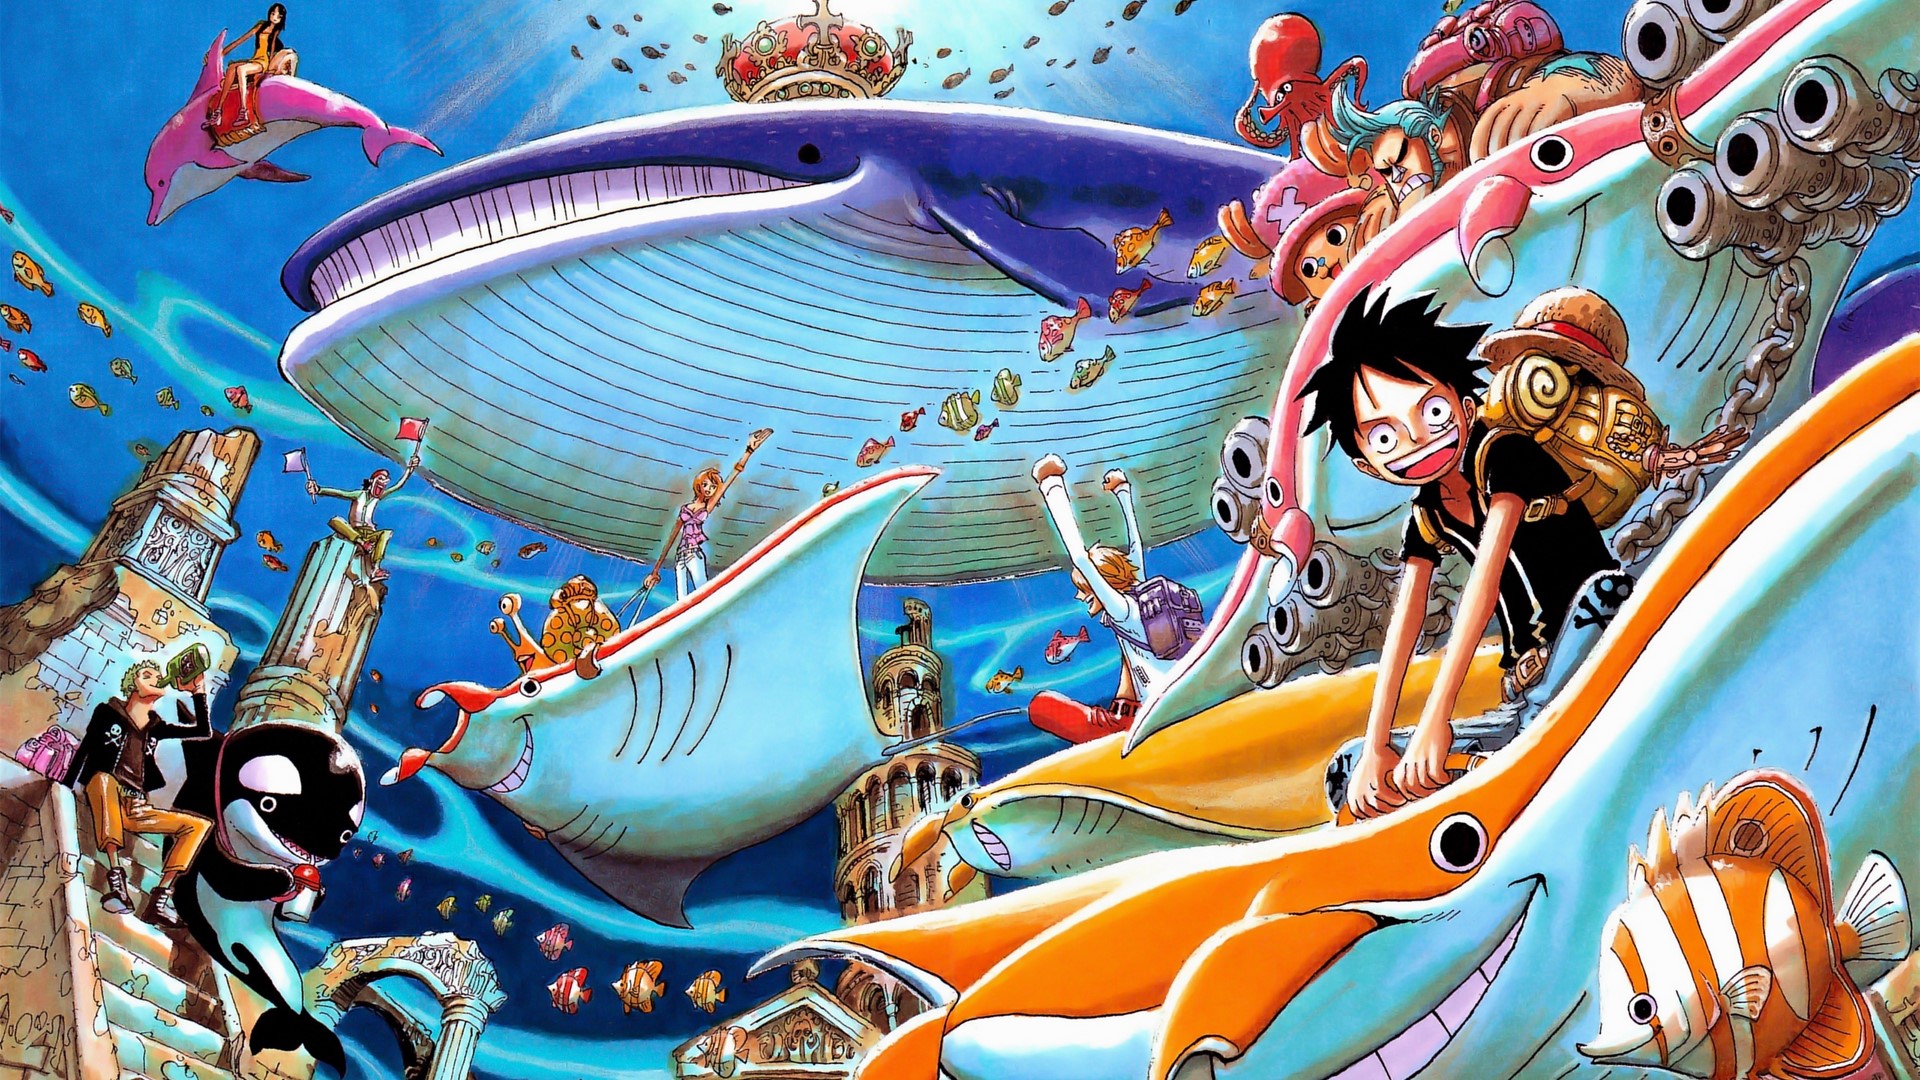 One Piece ワンピース の超高画質壁紙画像まとめ 8 22 Renote リノート